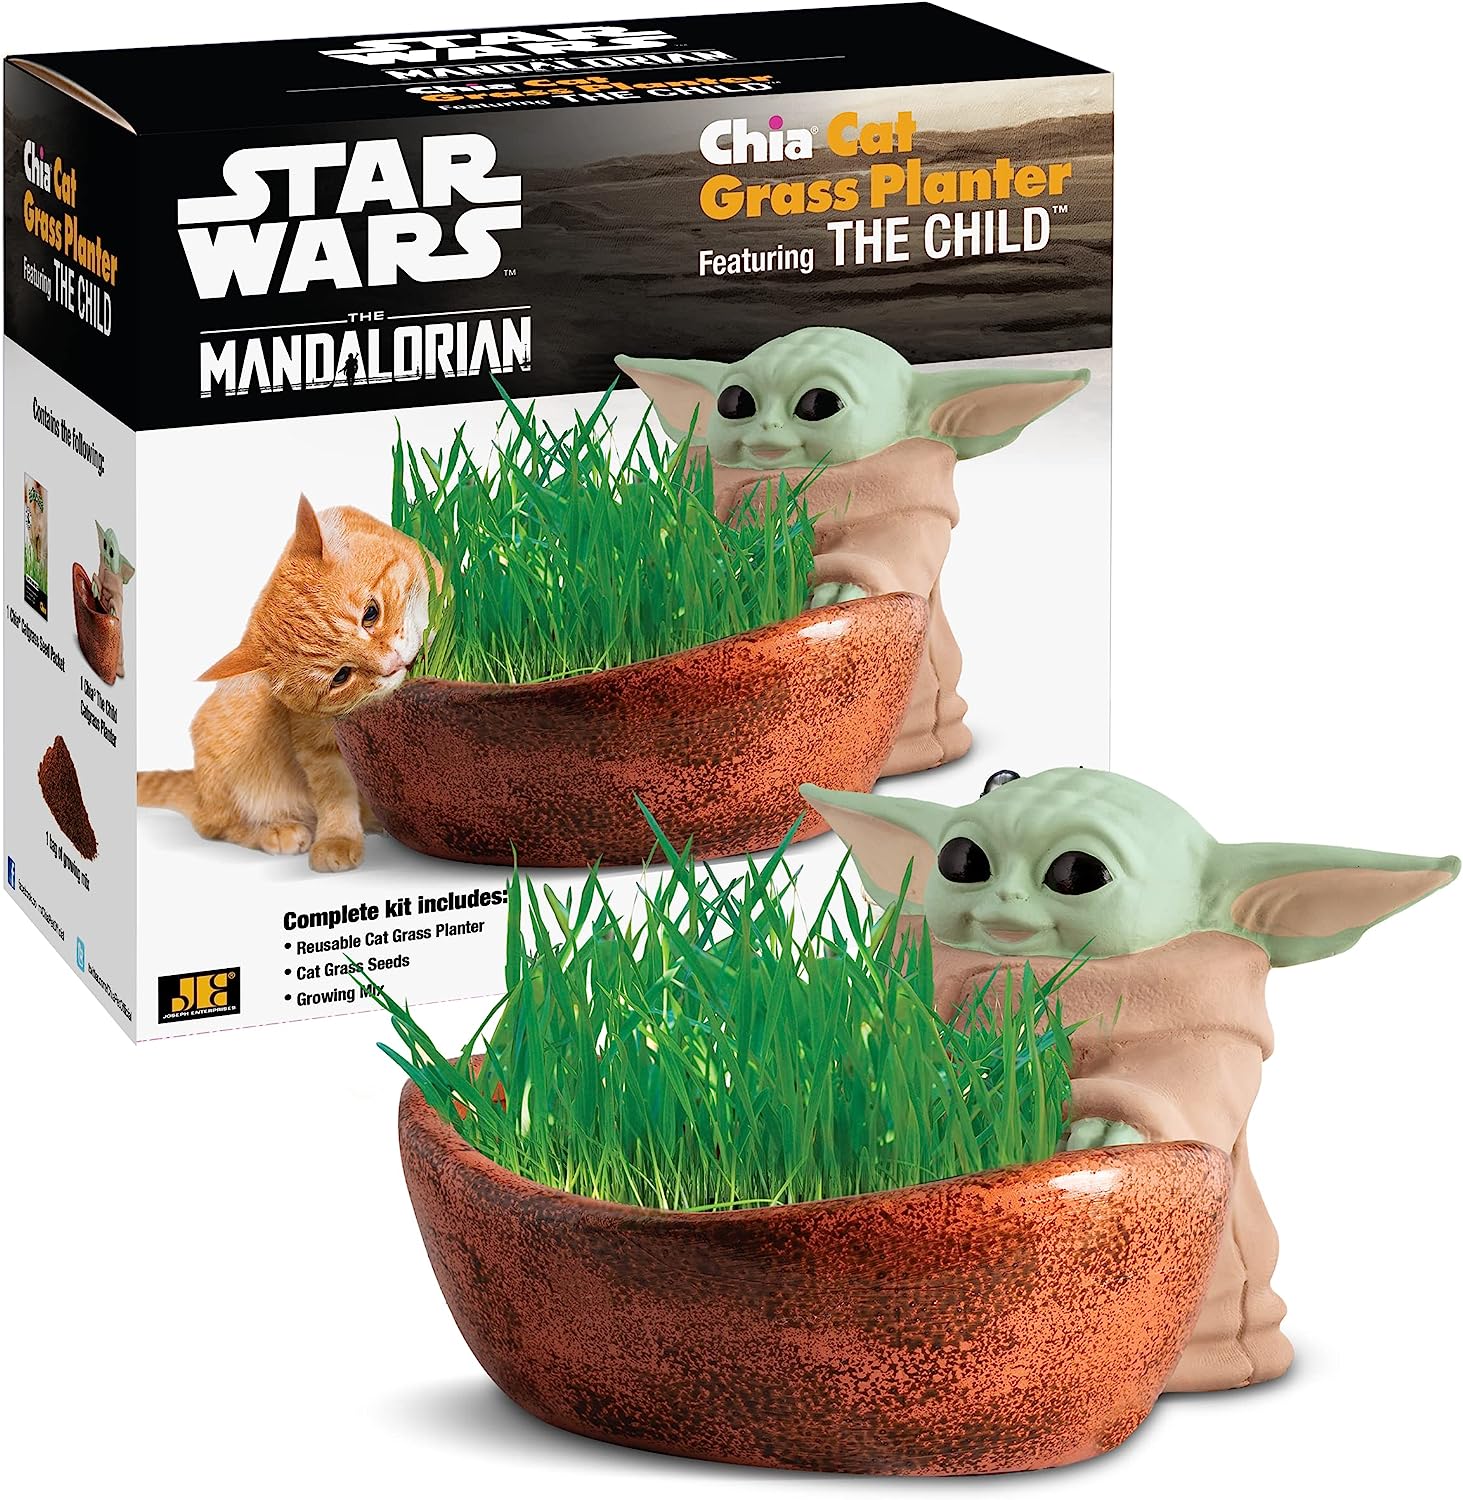 Chia Cat Grass Planter - Star Wars The Mandalorian, The Child